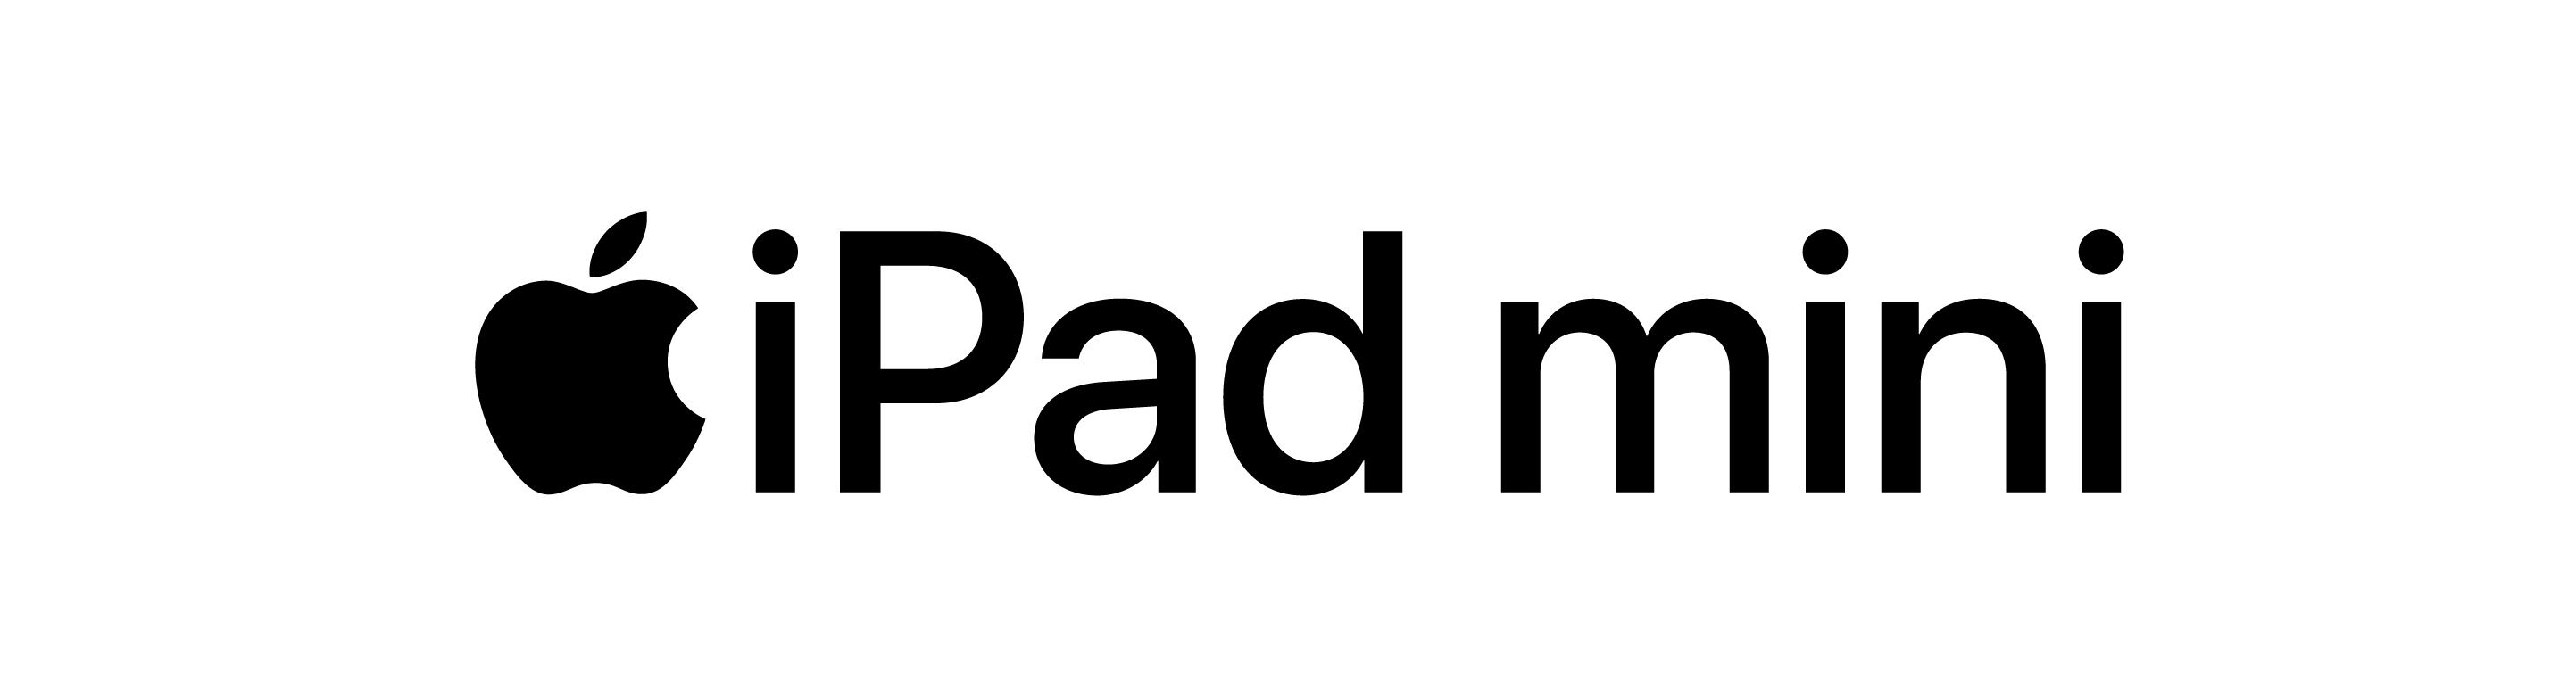 ipad air logo